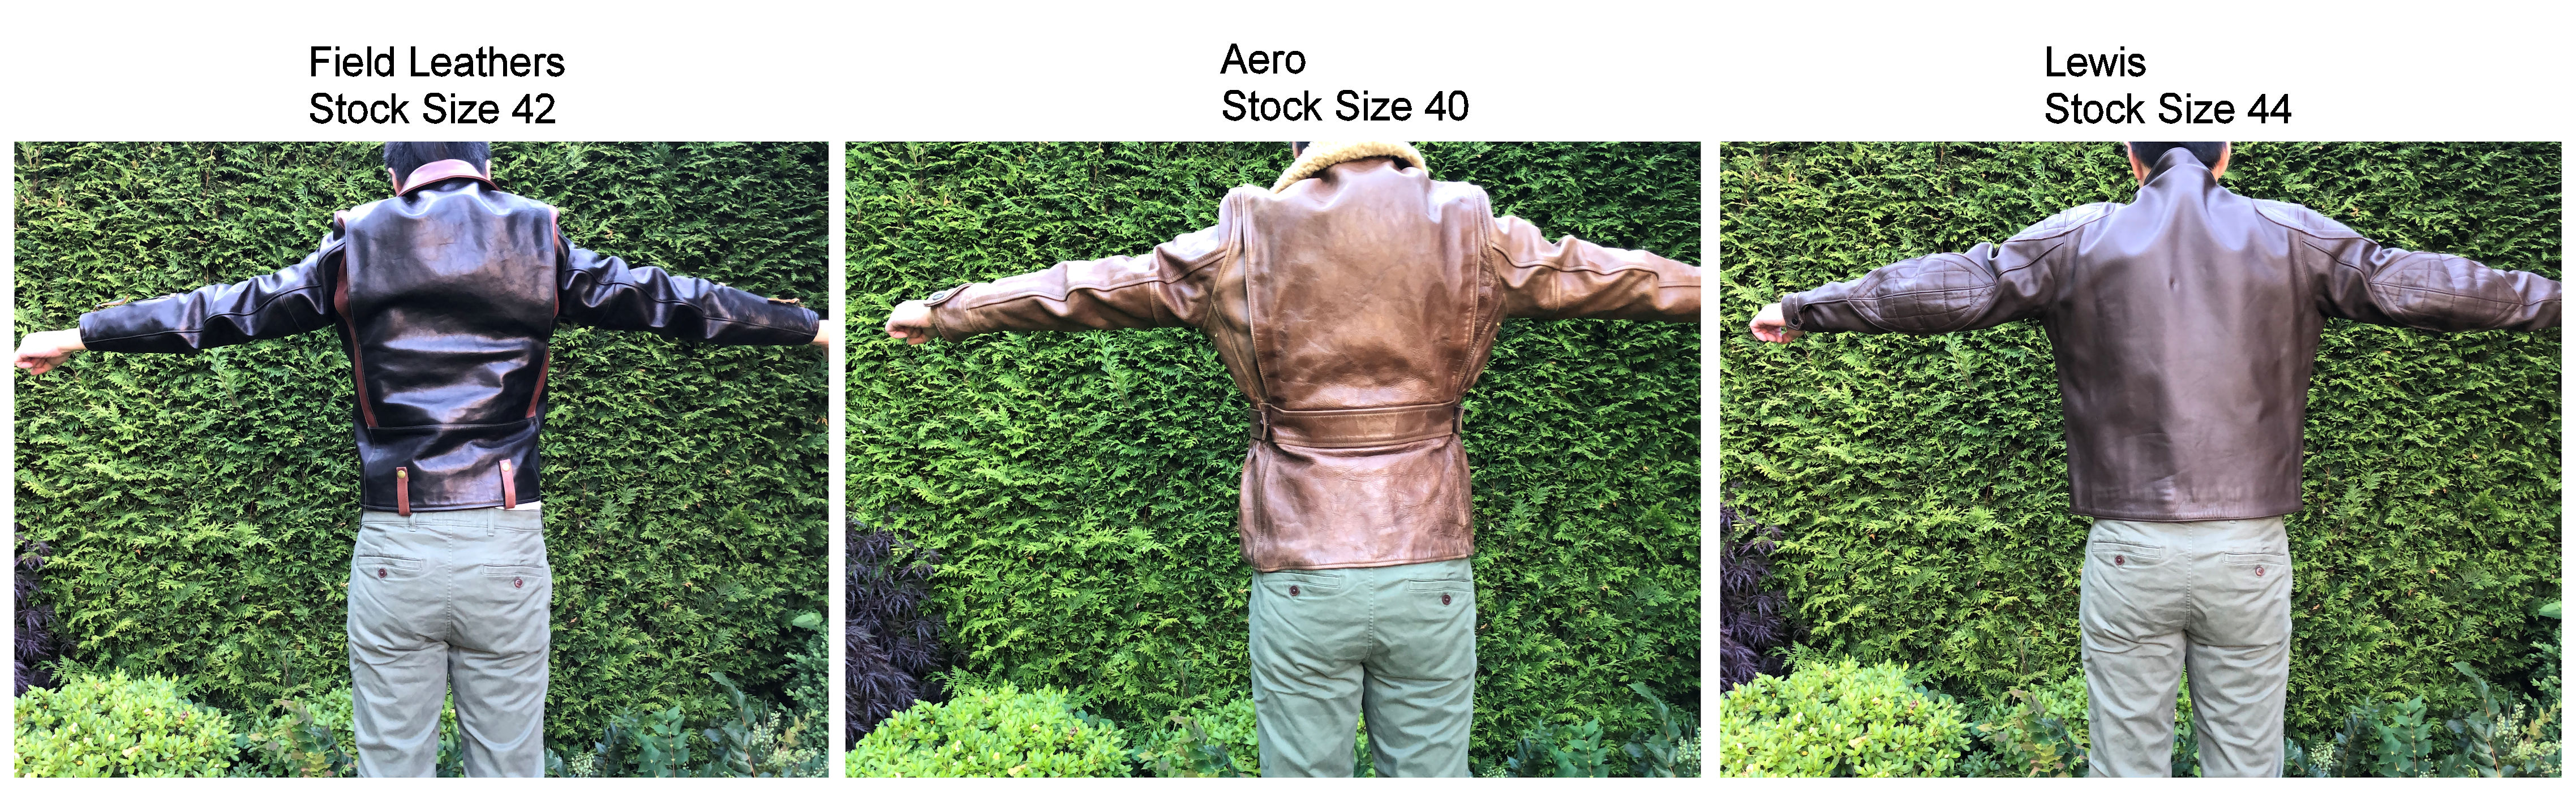 Field vs Aero vs Lewis 01.jpg